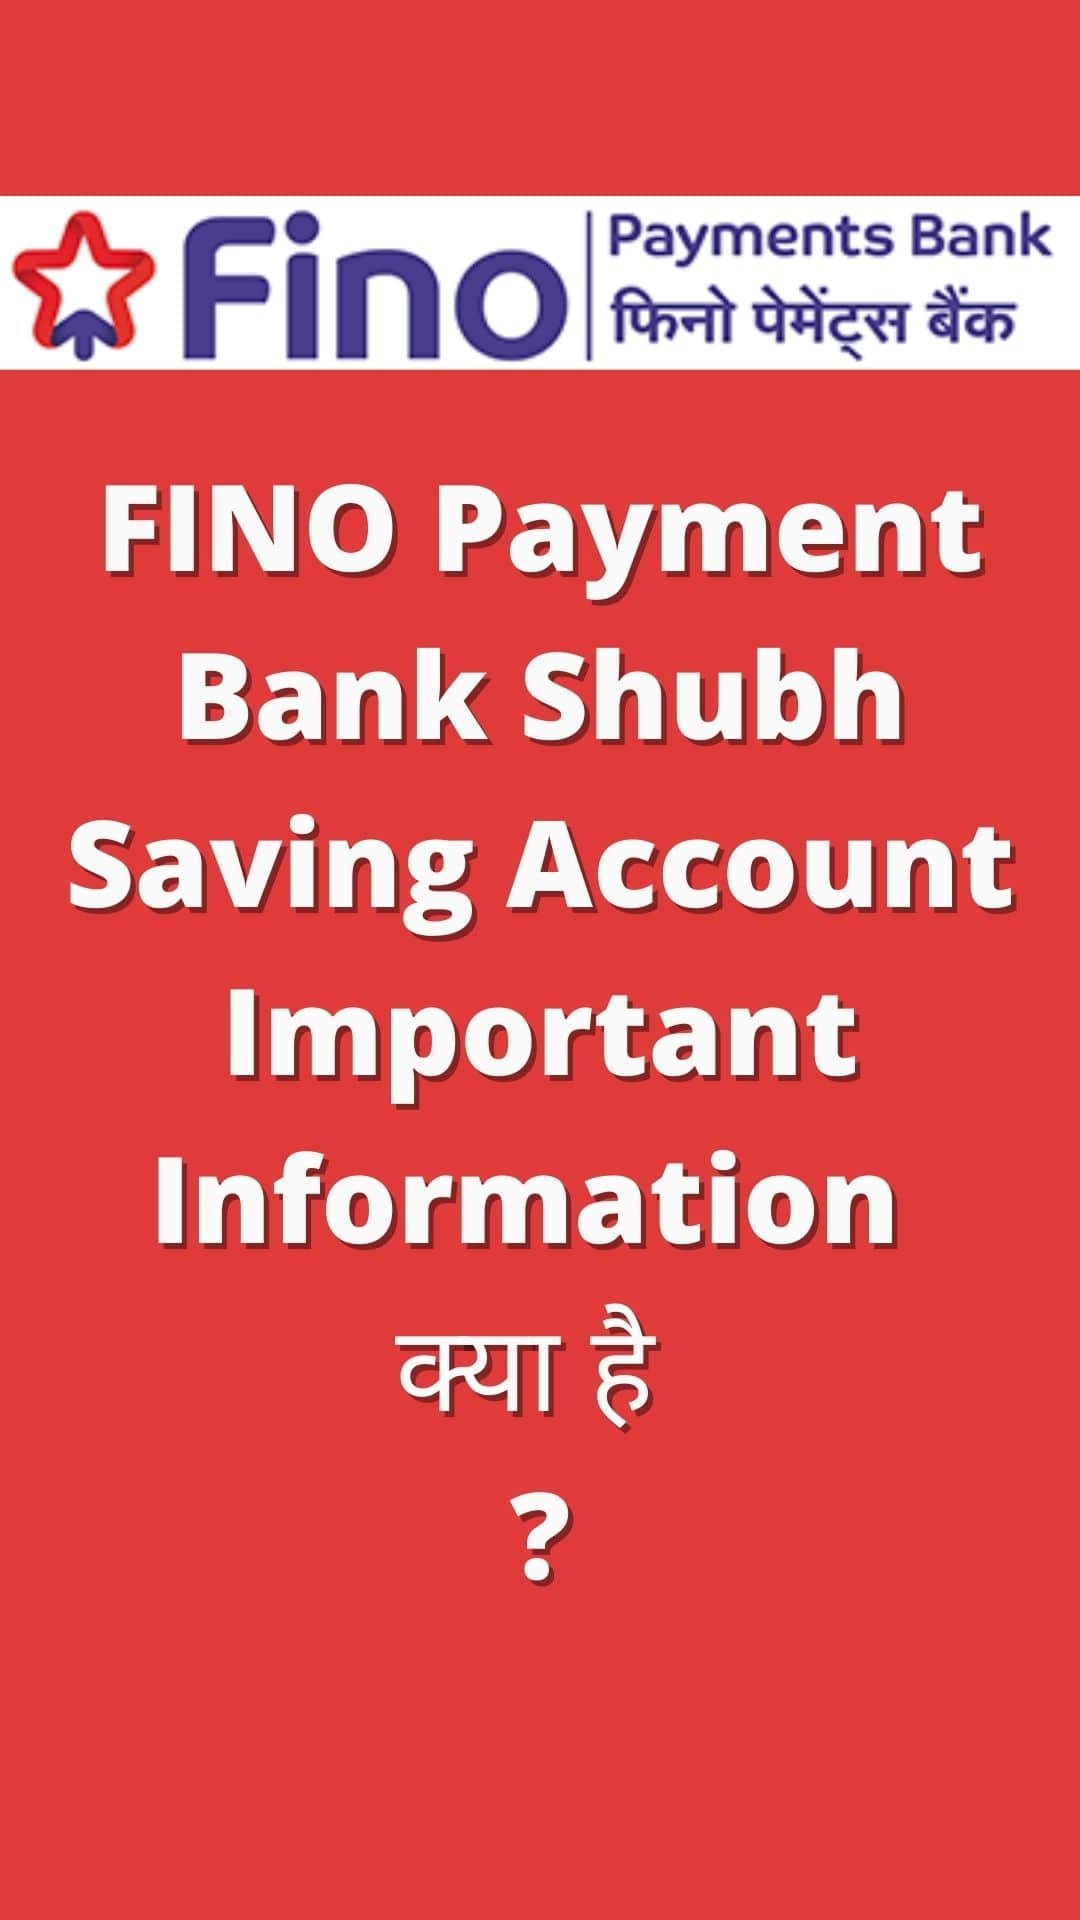 Rishi Gupta - Fino Payments Bank Ltd | LinkedIn